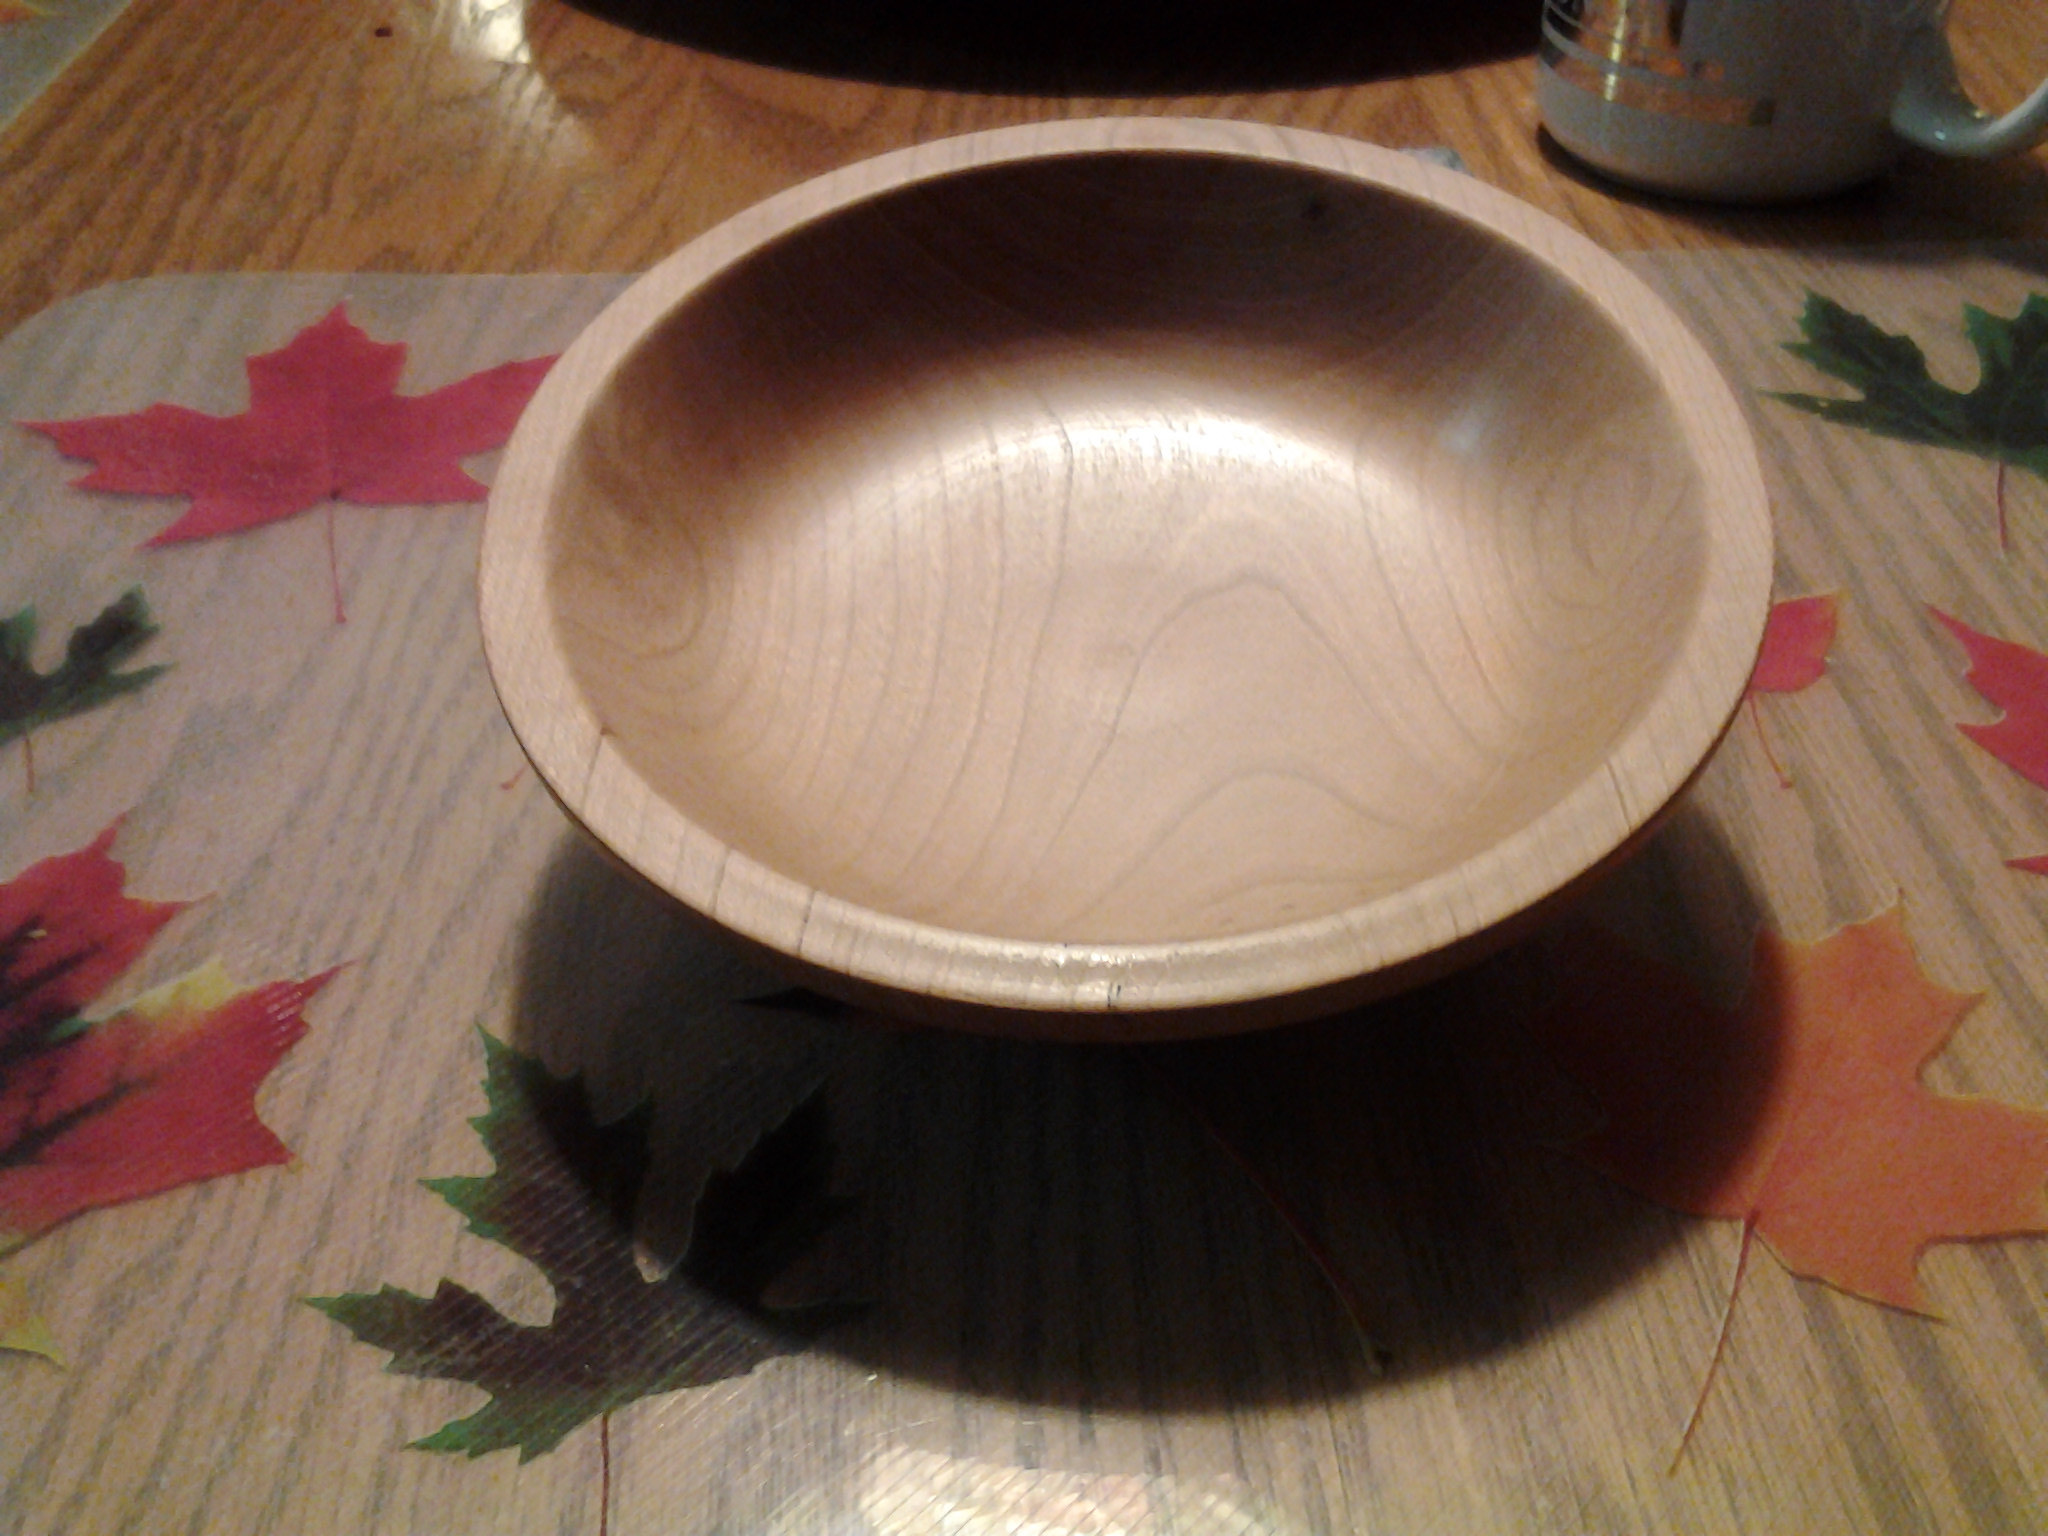 The first bowl I ever Made